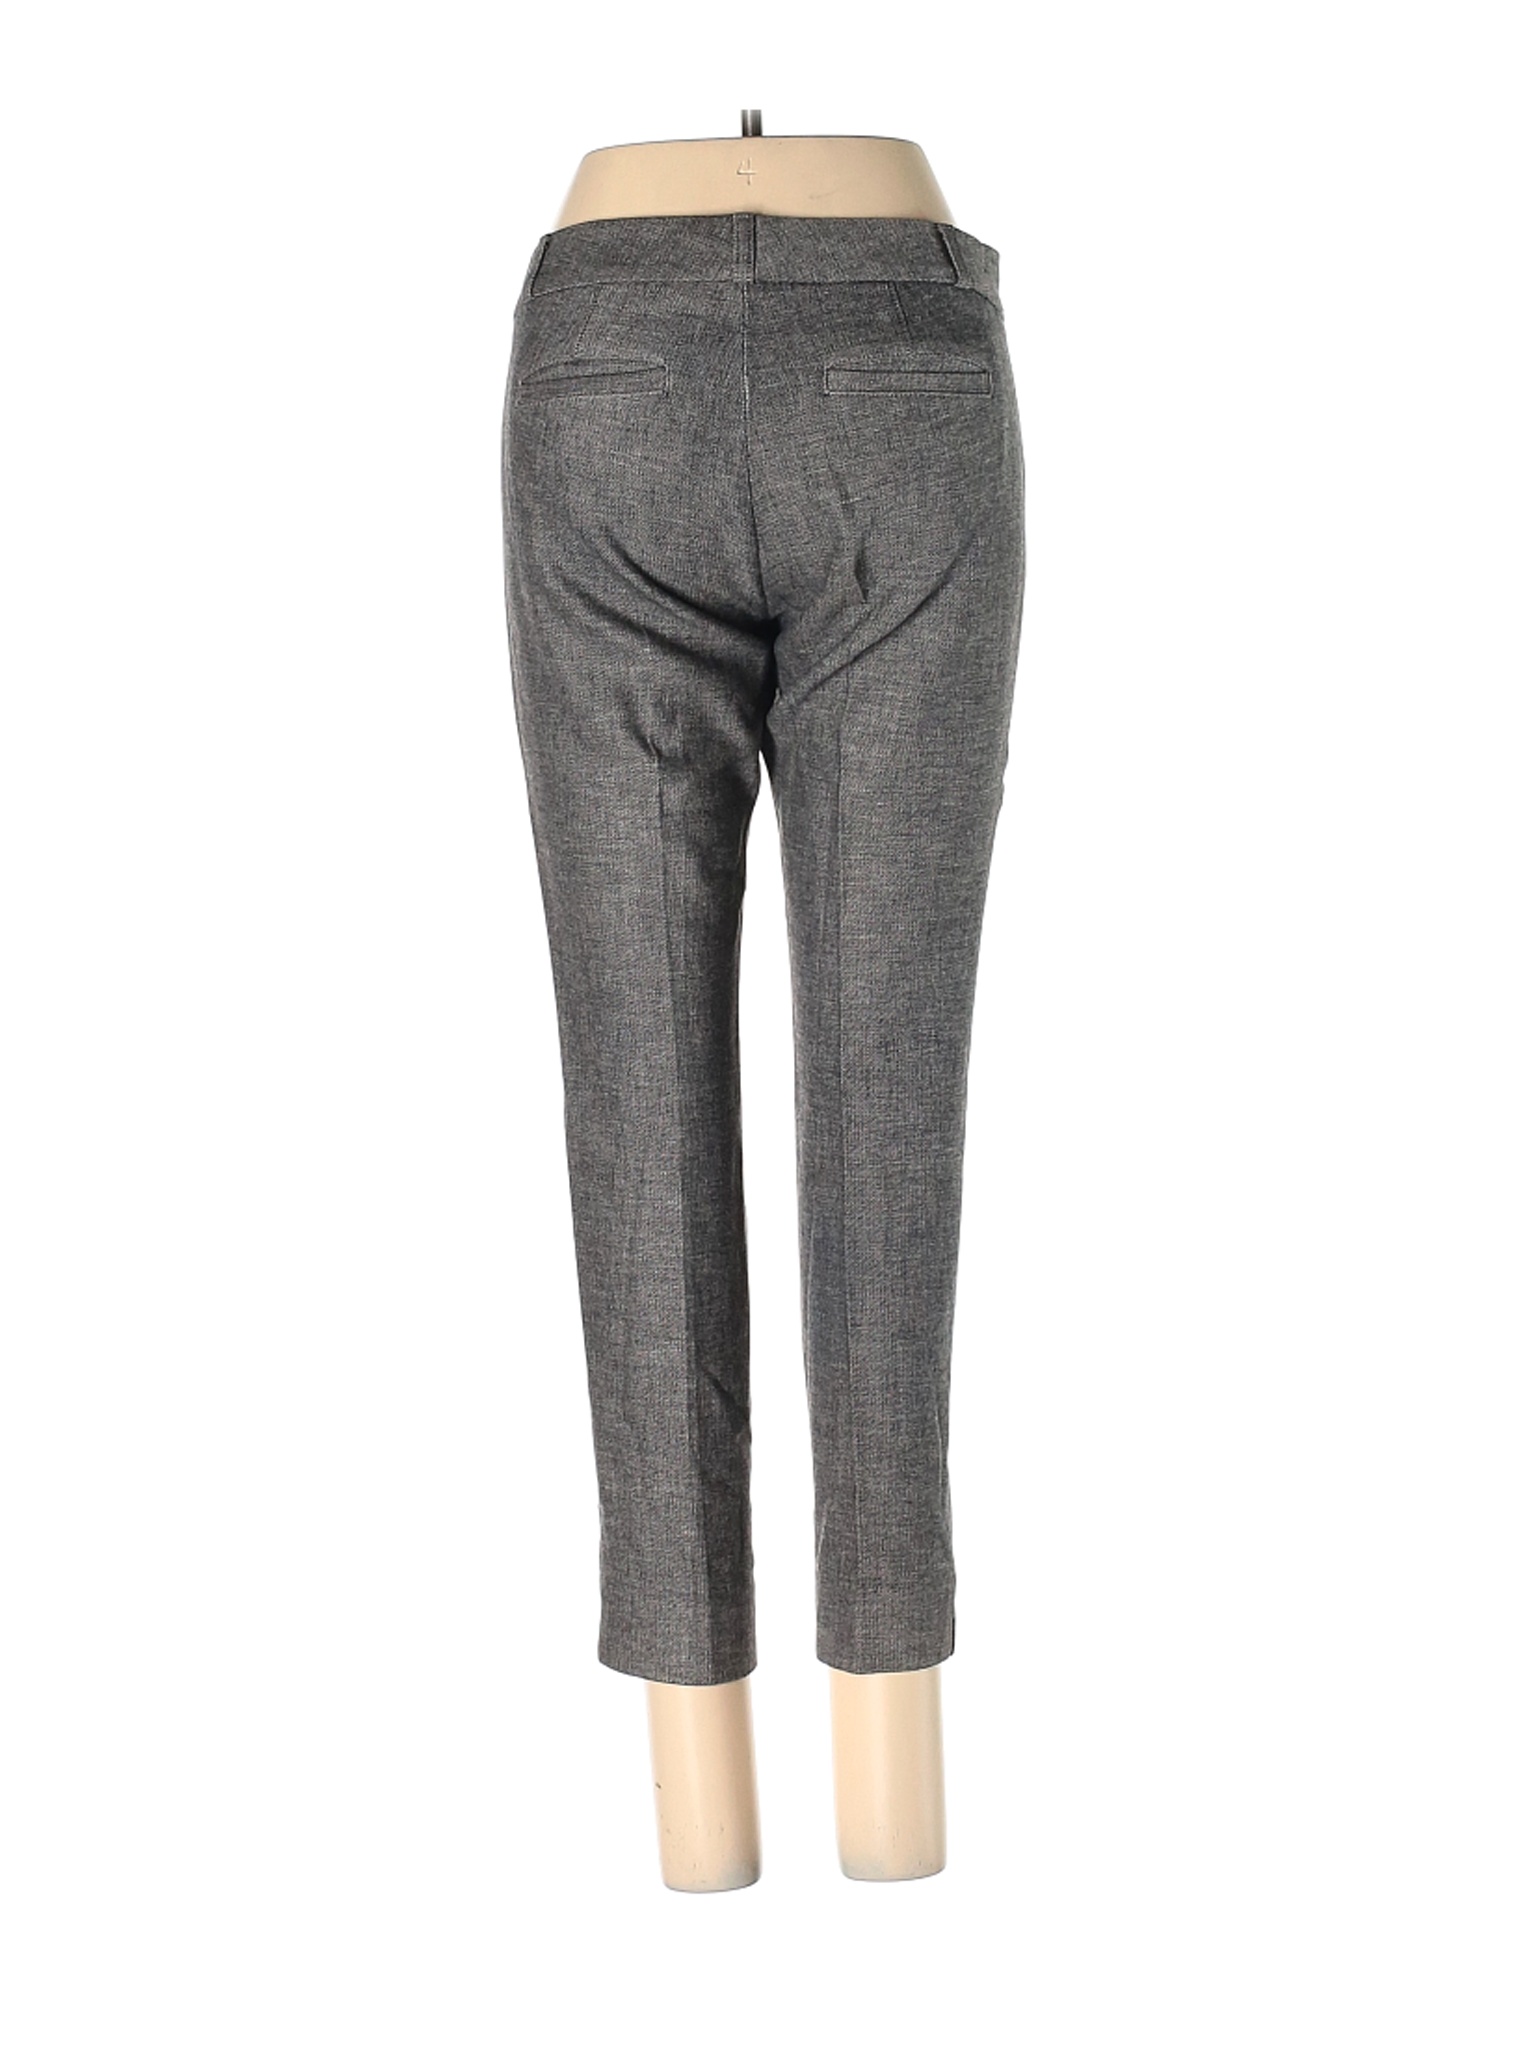 Banana Republic Women Gray Dress Pants 2 Petites | eBay